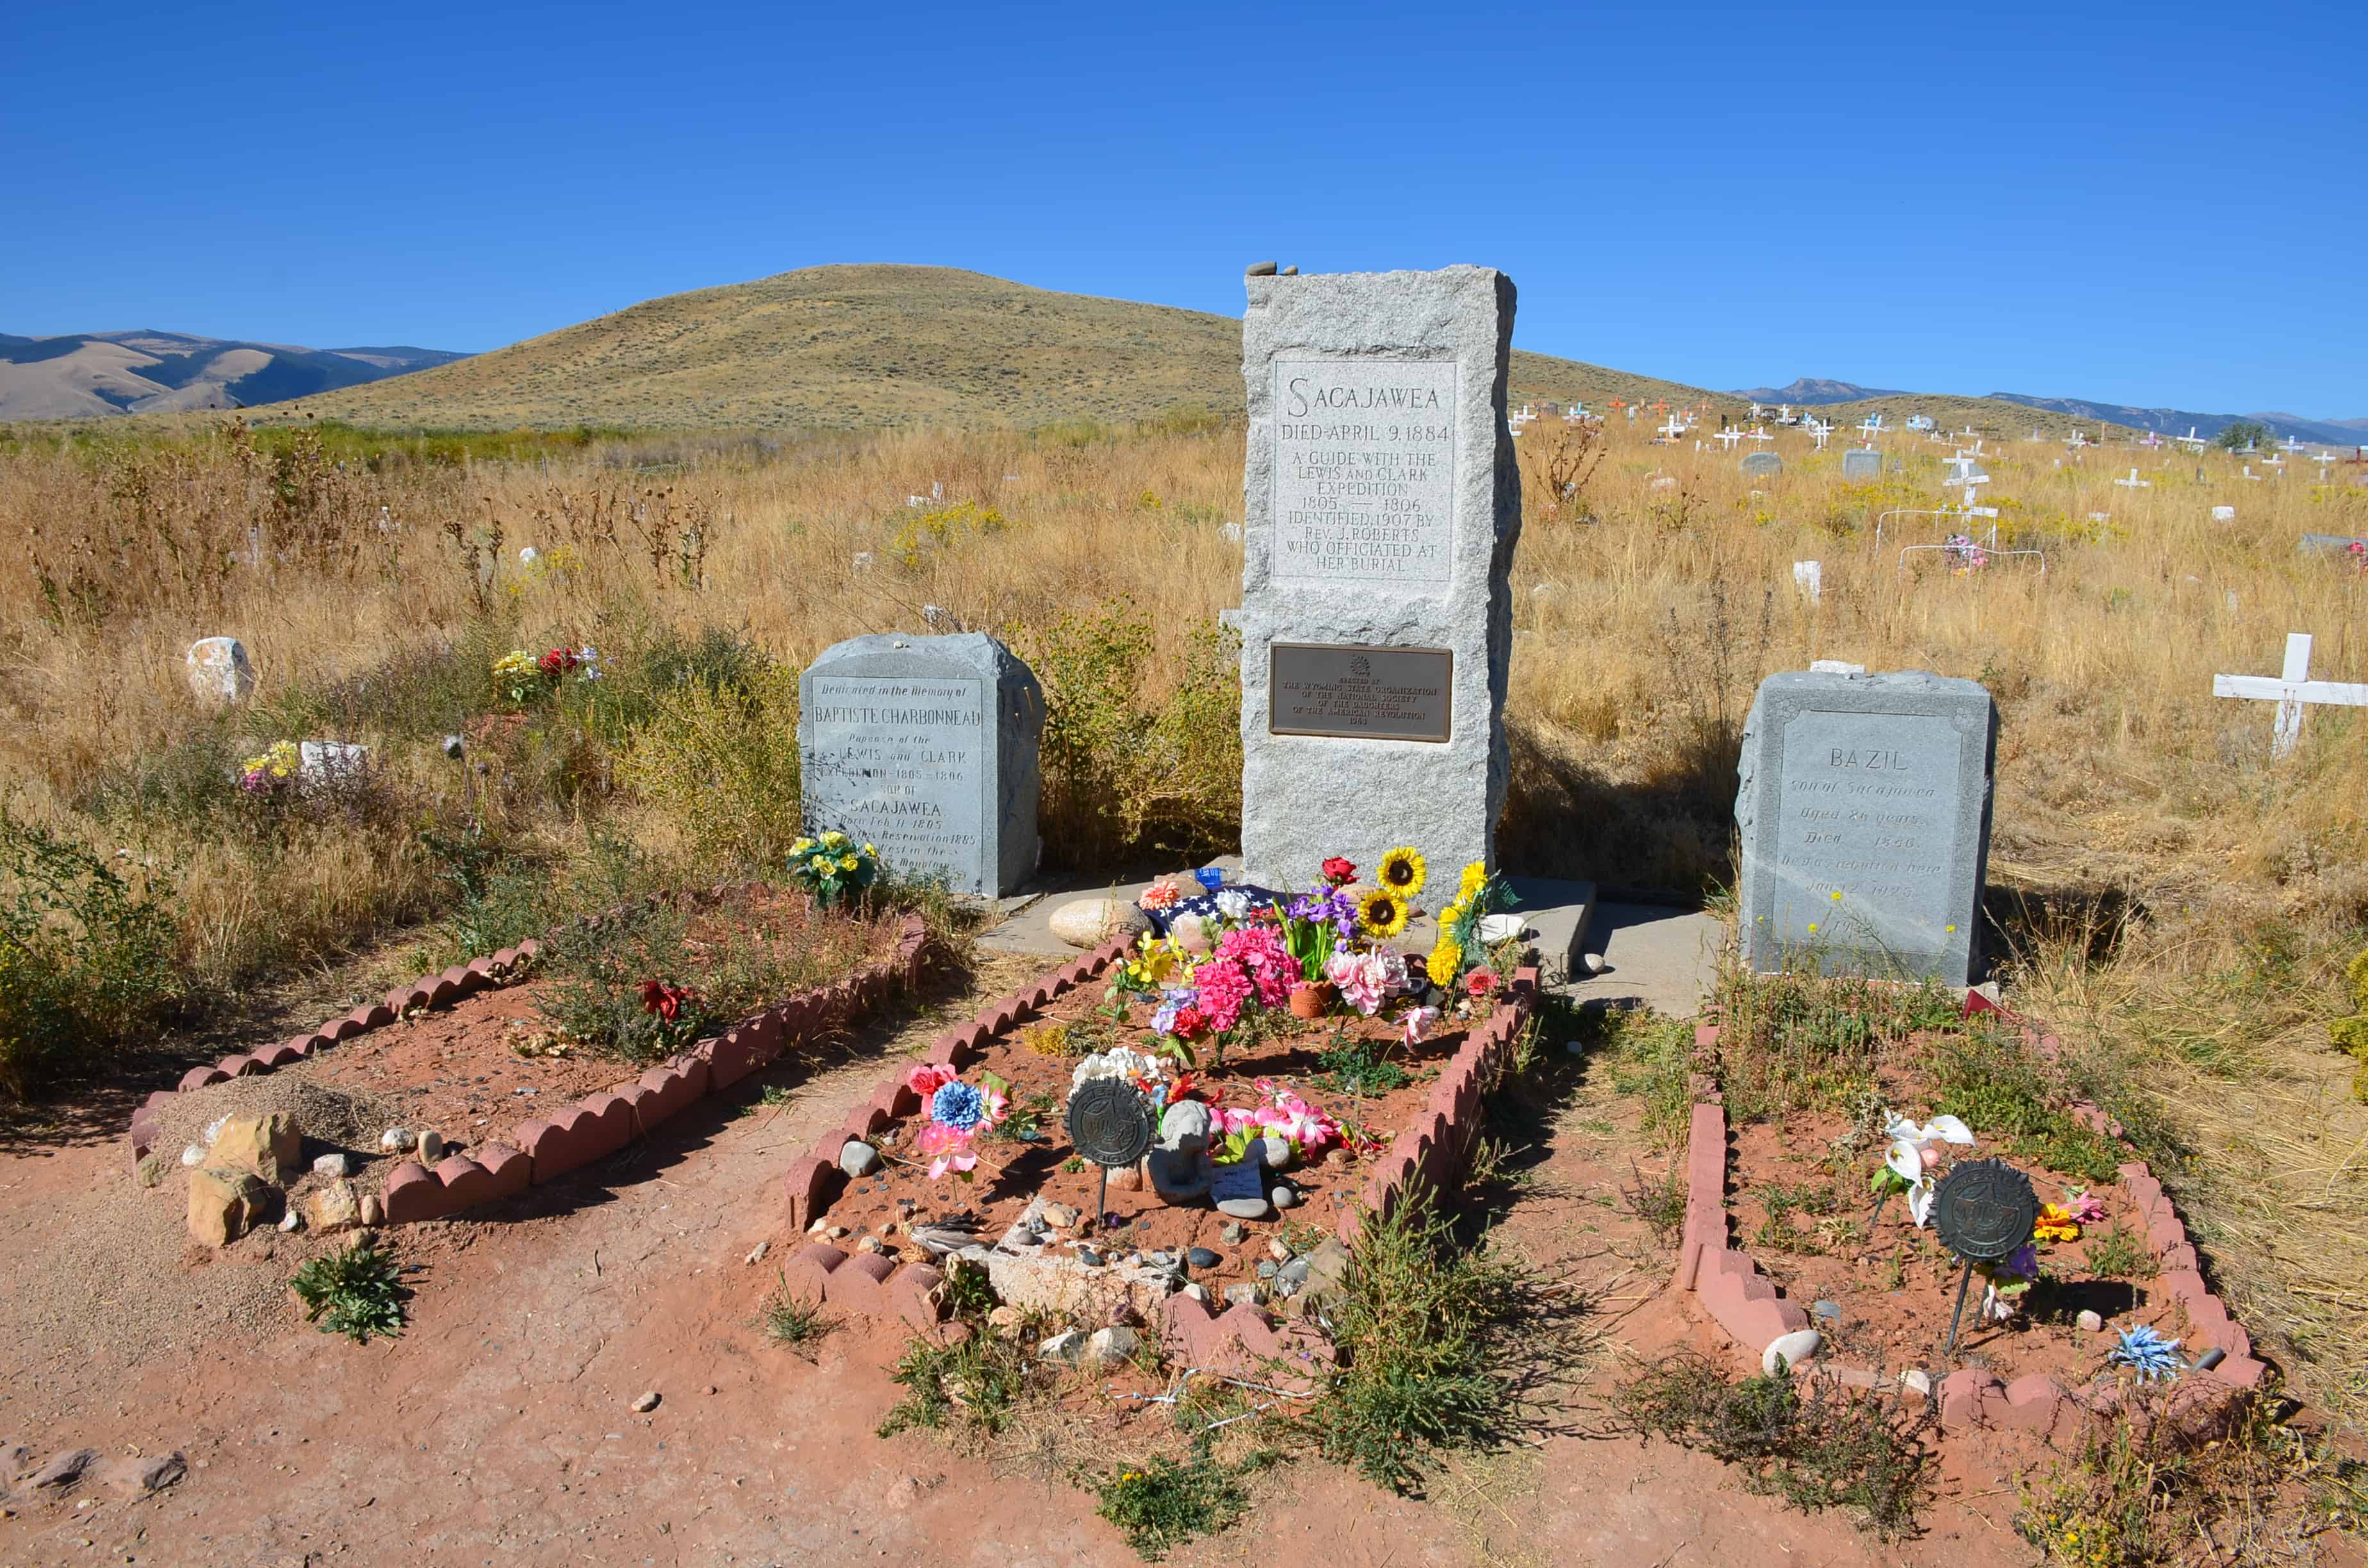 Sacajawea gravesite in Fort Washakie, Wyoming